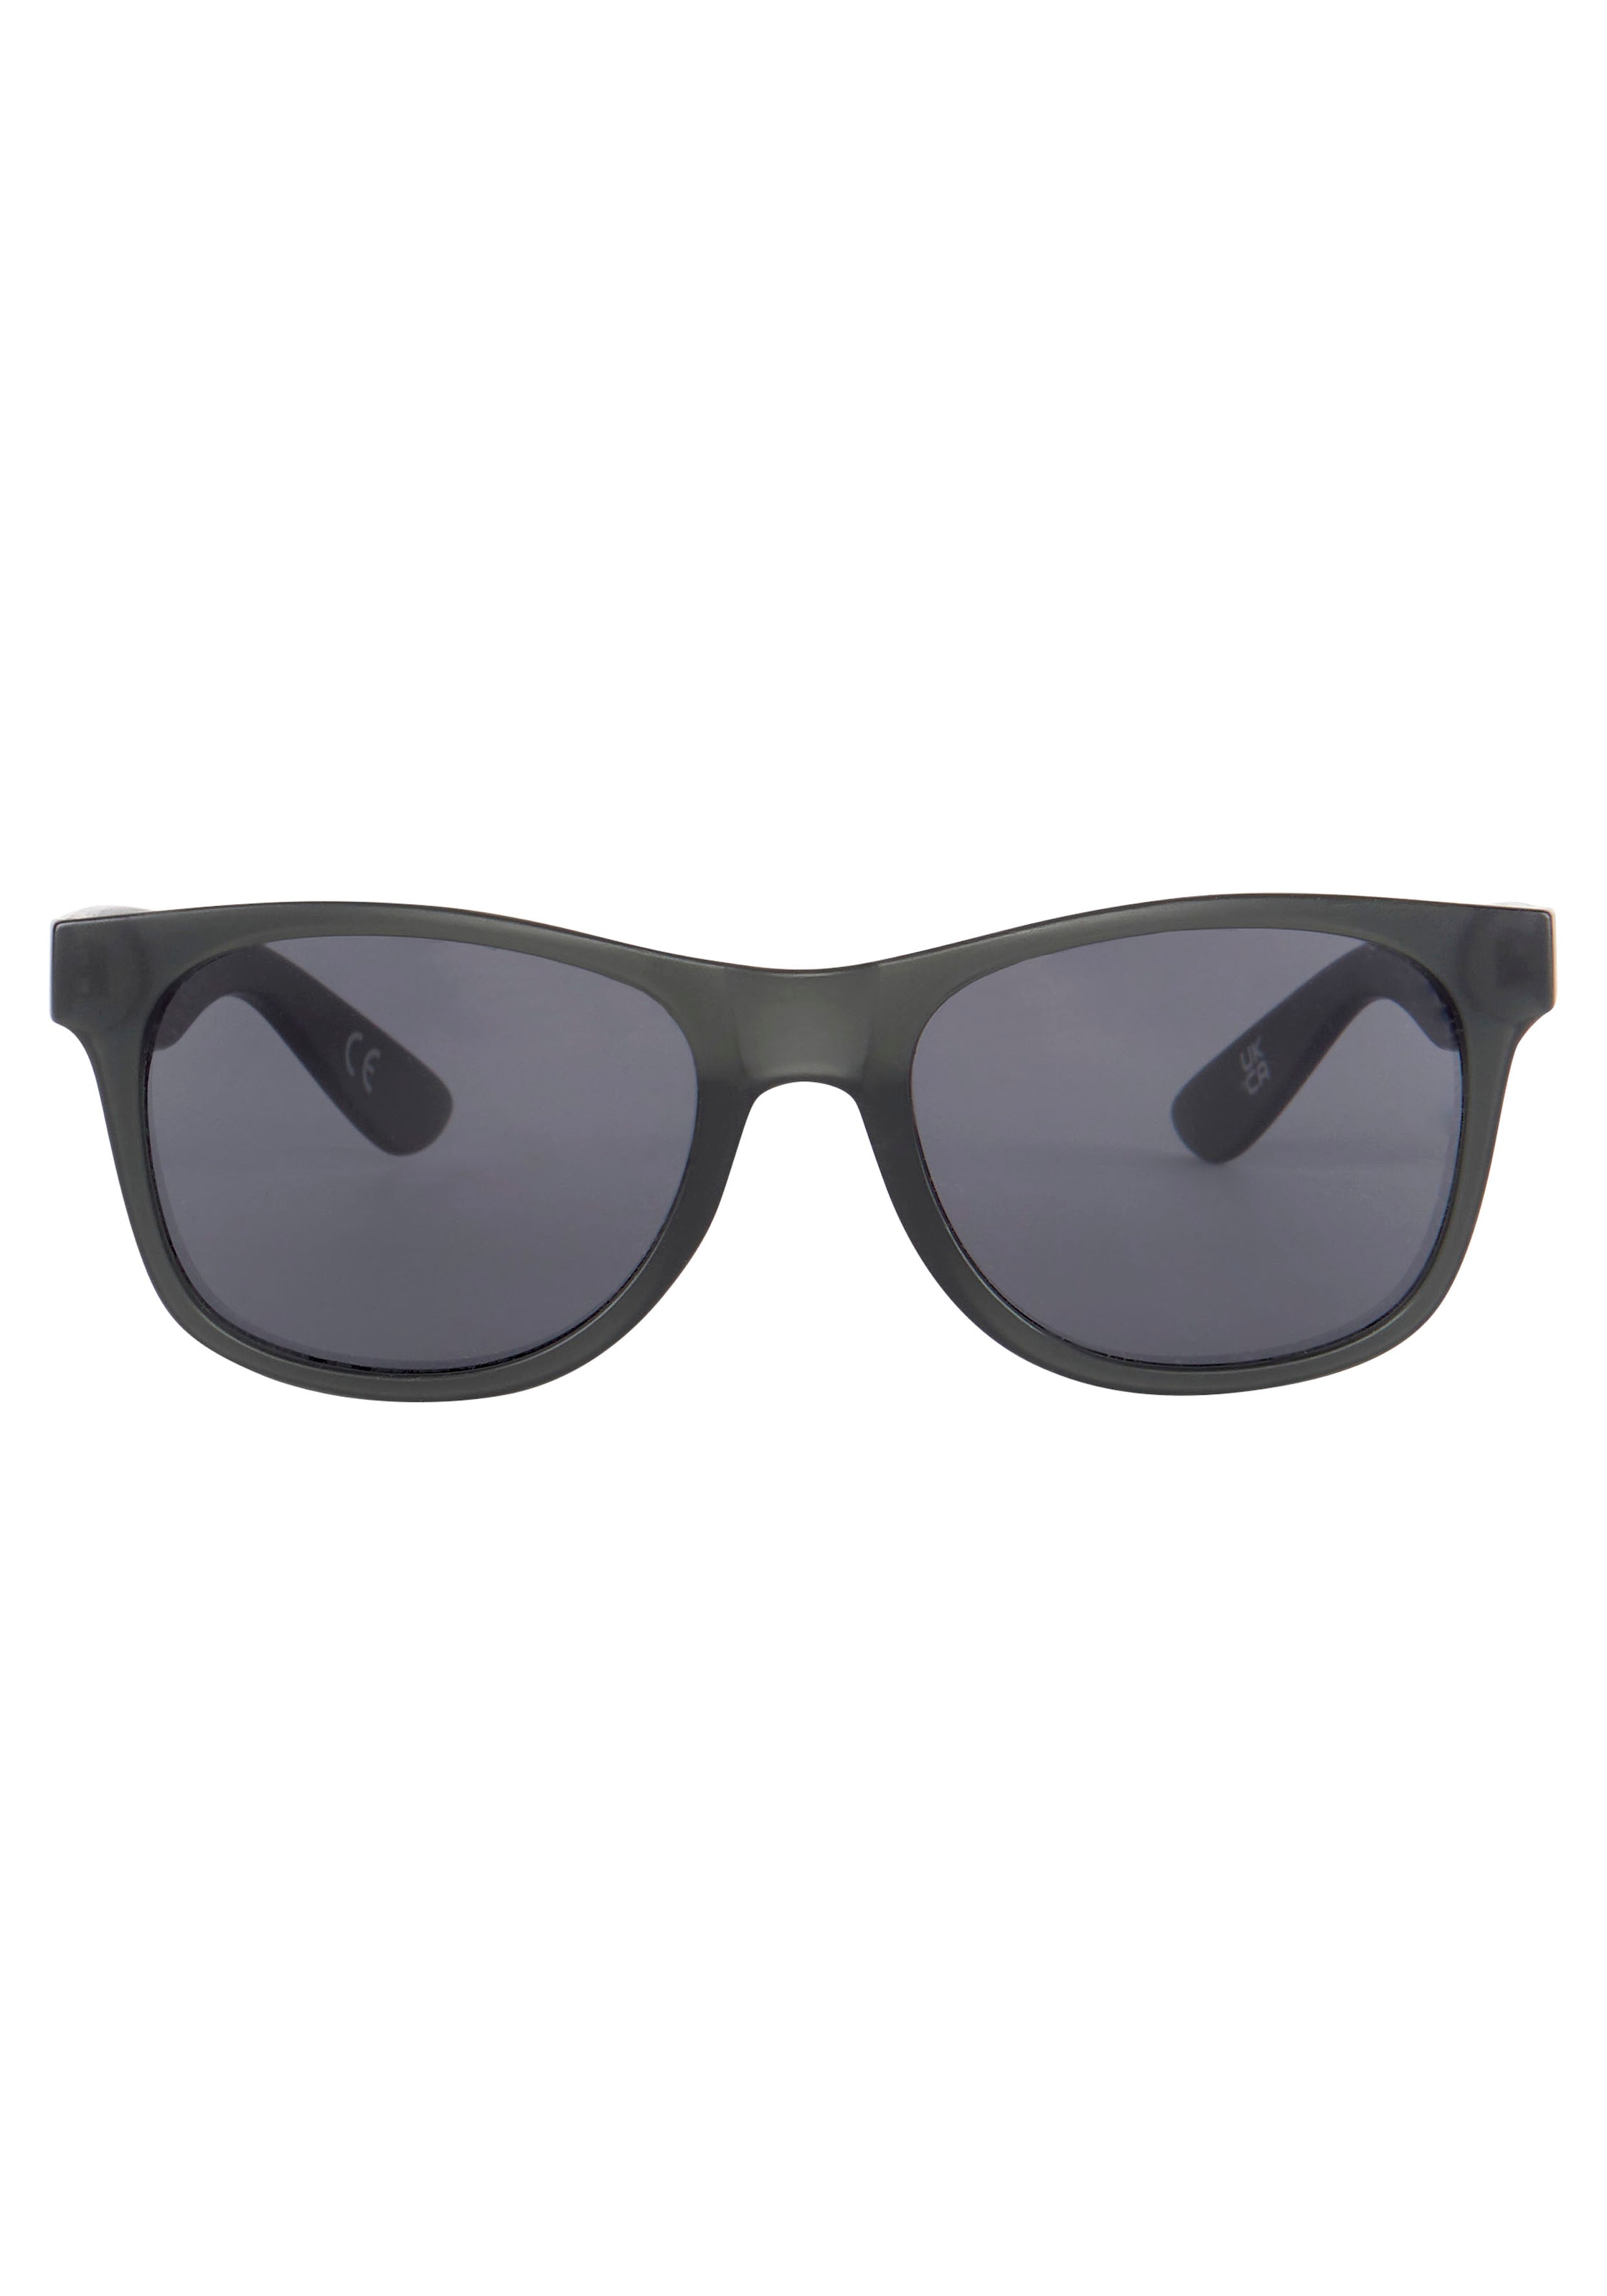 Vans Sonnenbrille online shoppen bei OTTO